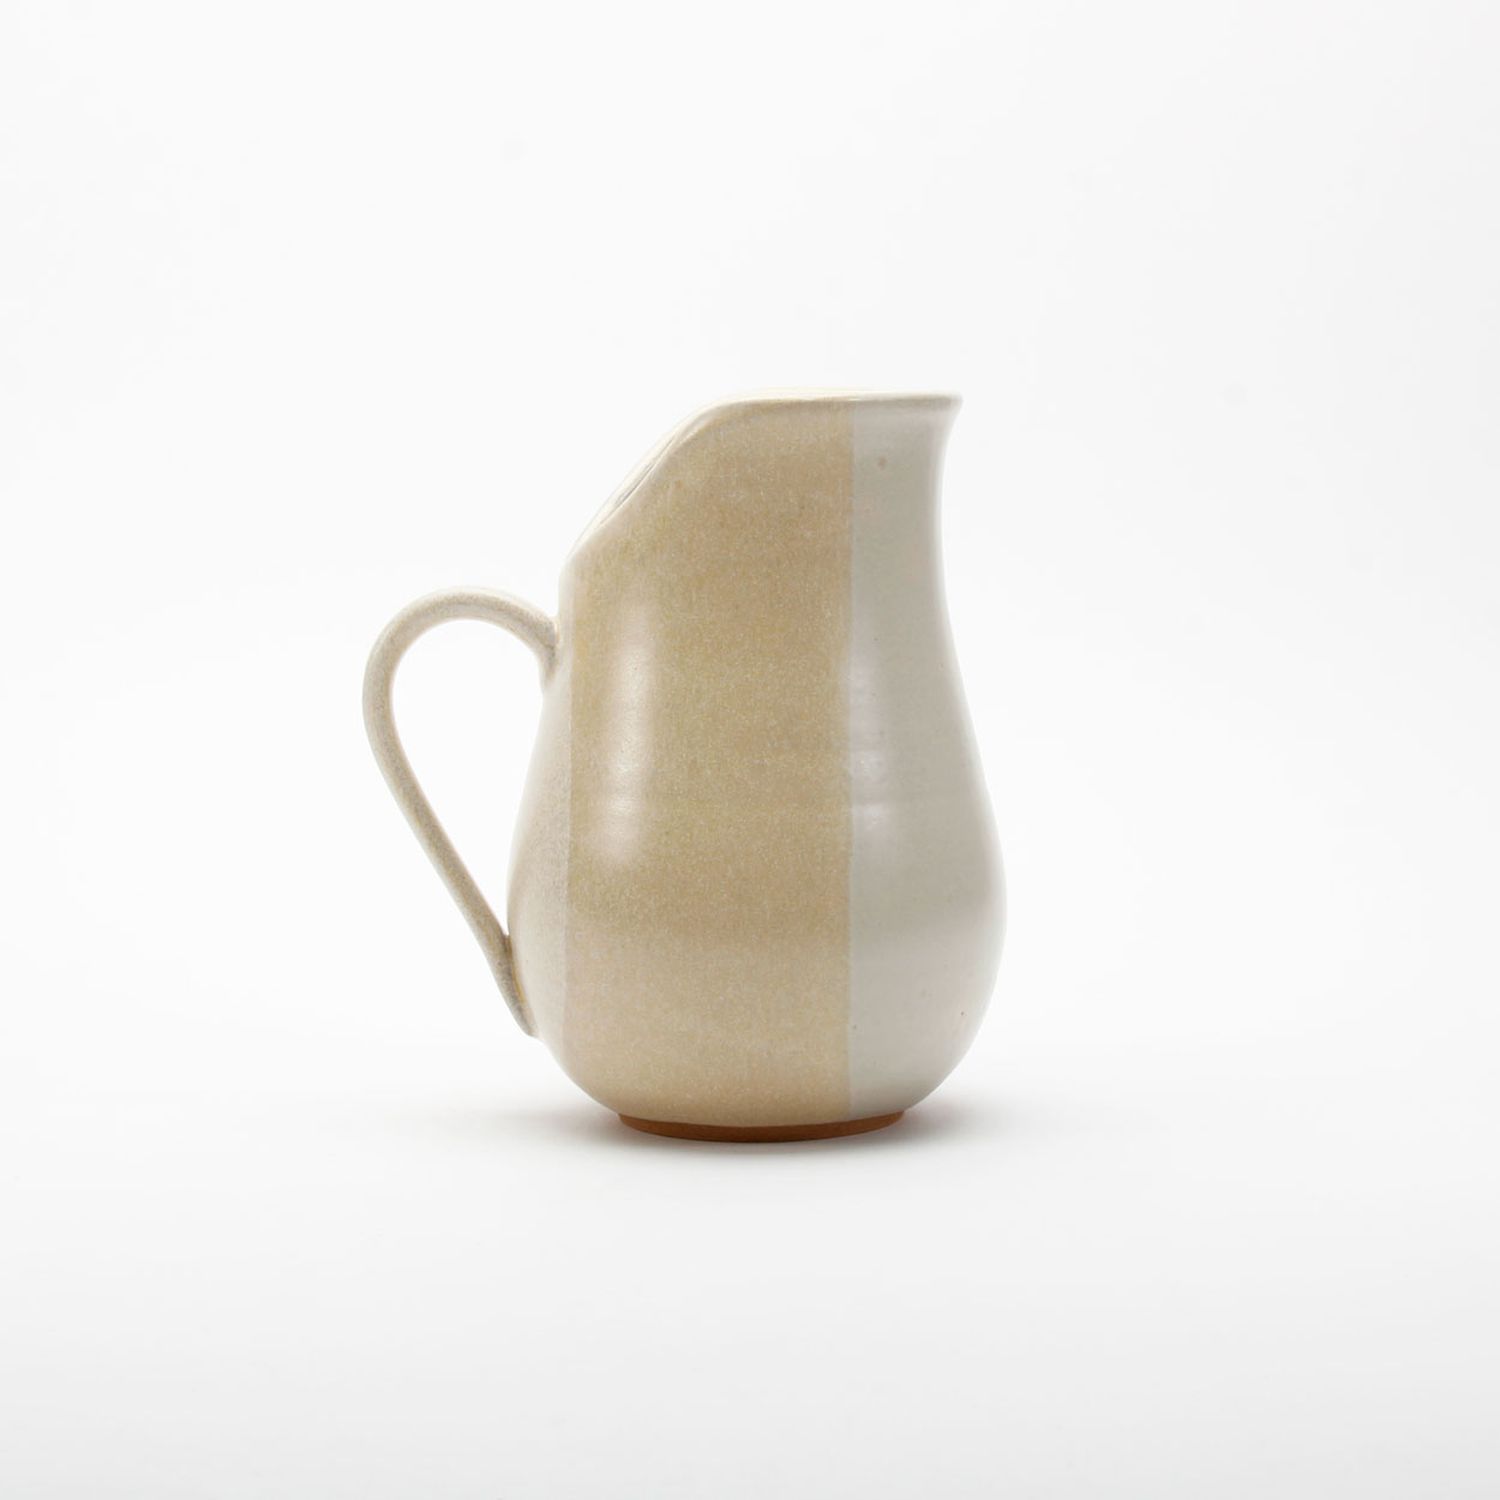 Shiralee Pottery: Jug Product Image 1 of 2